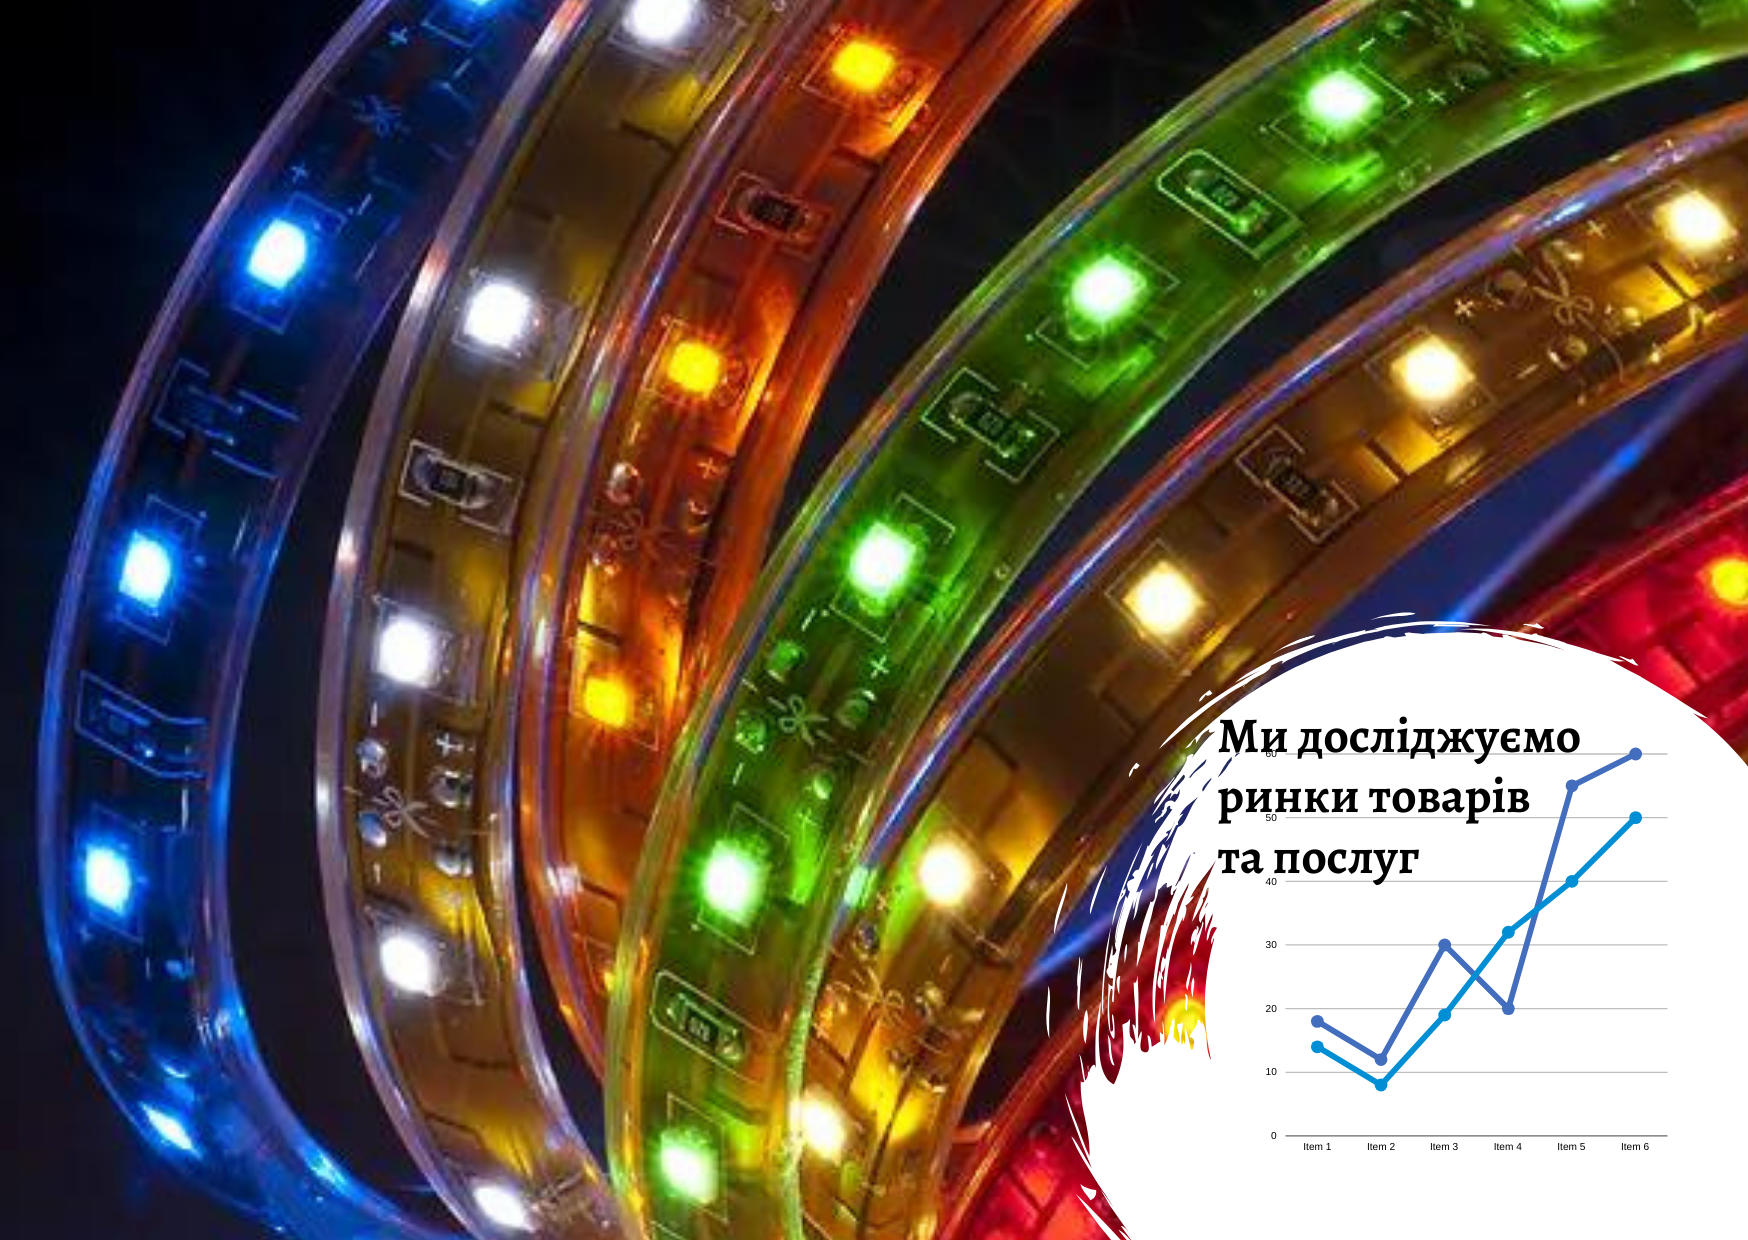 Ukrainian LED lighting market: main trends